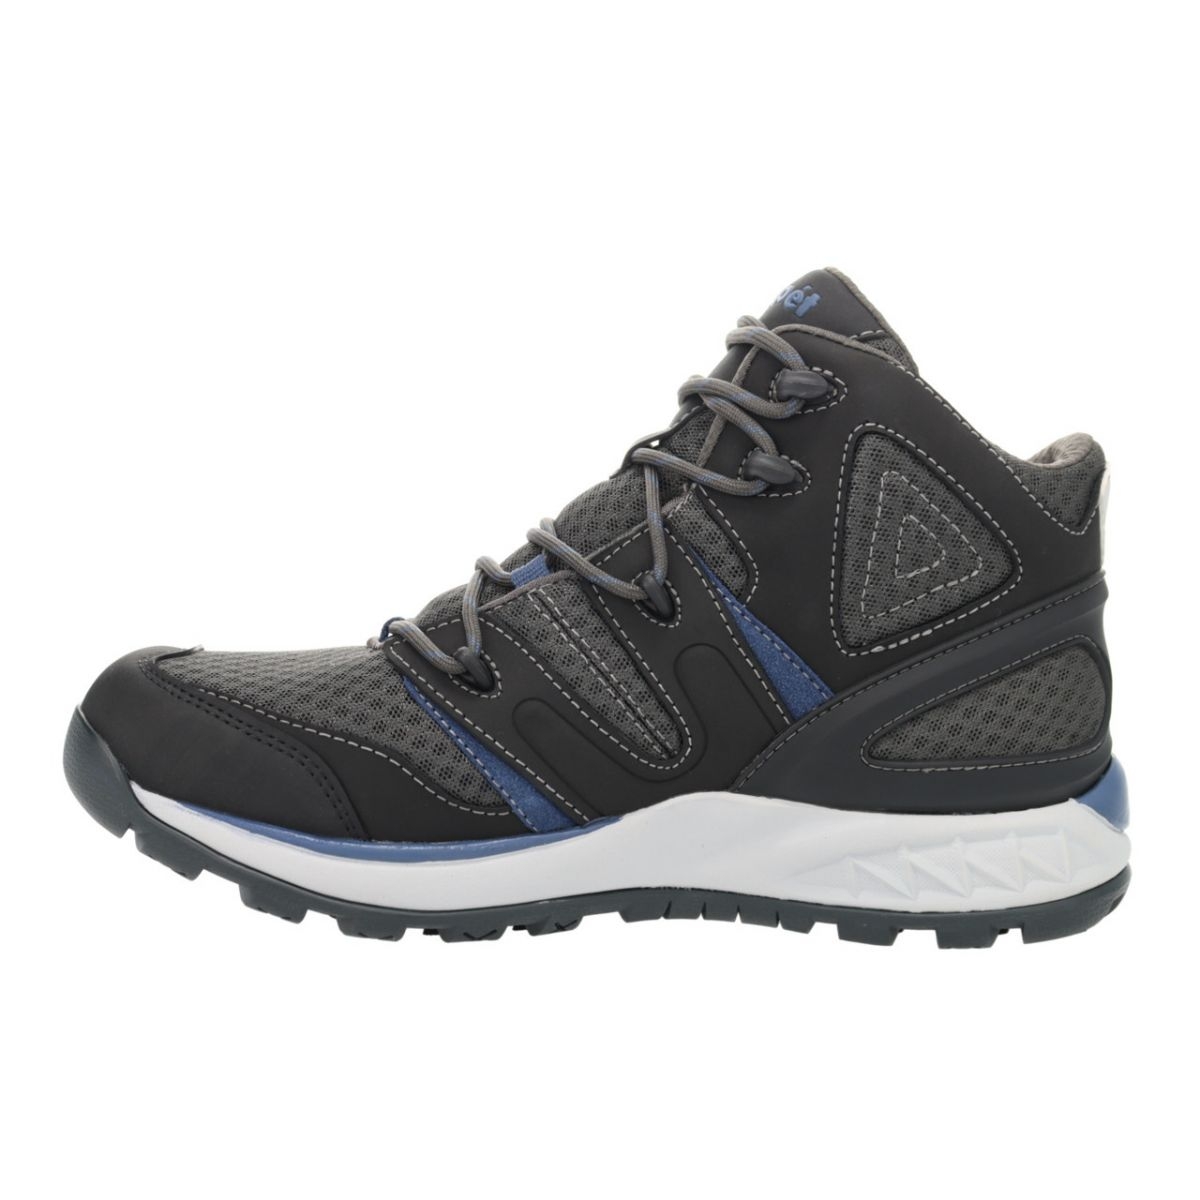 Propet Men's Veymont Waterproof Hiking Boot Grey/Blue - MOA022SGRB GREY/BLUE - GREY/BLUE, 10